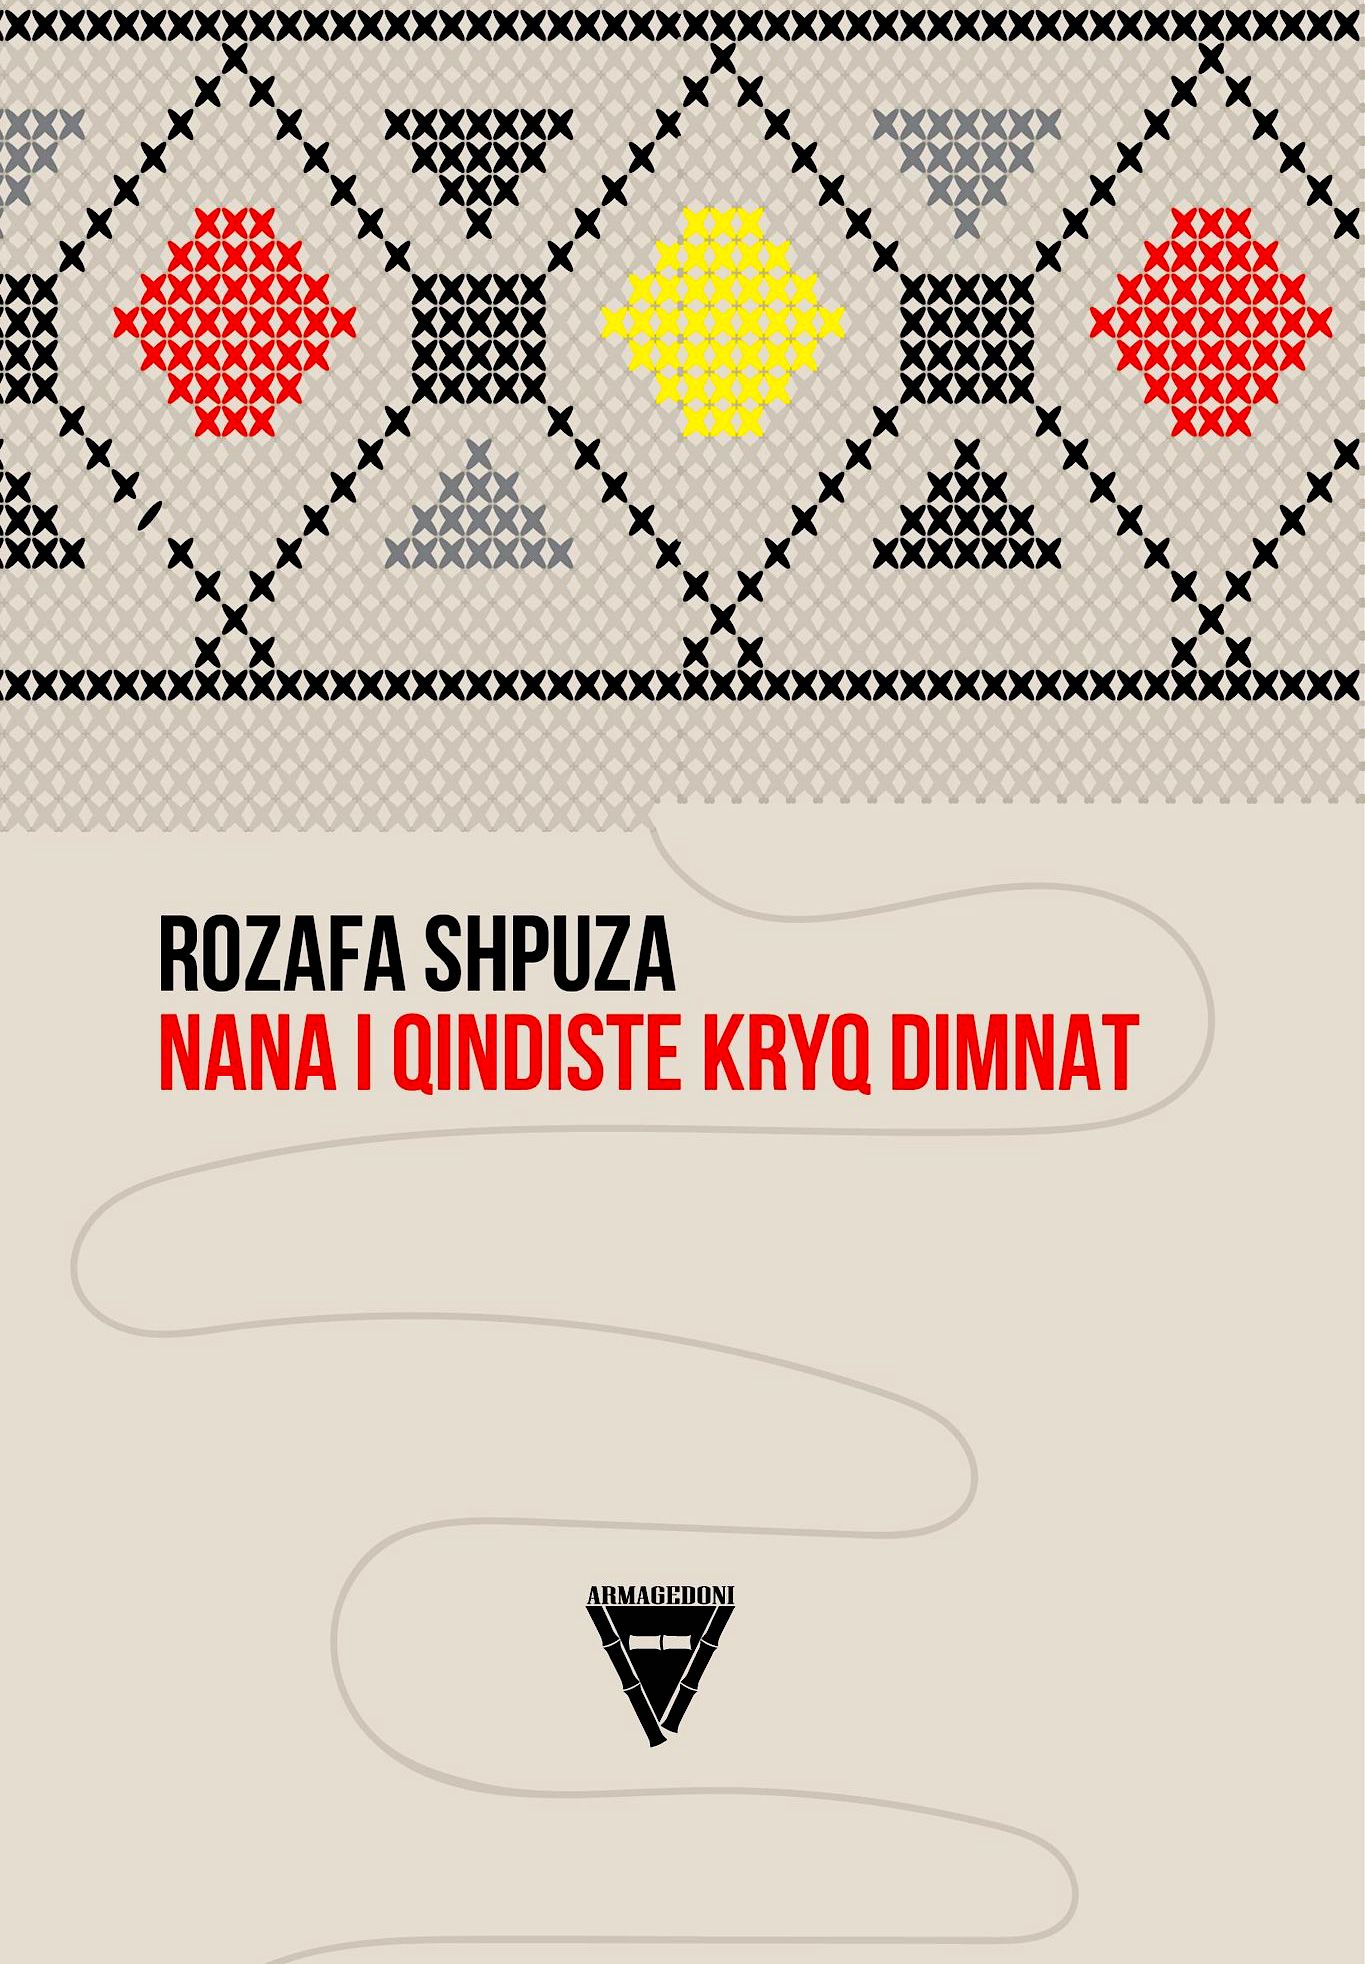 Rozafa Shpuza - Nana i qindiste kryq dimnat - Poezi